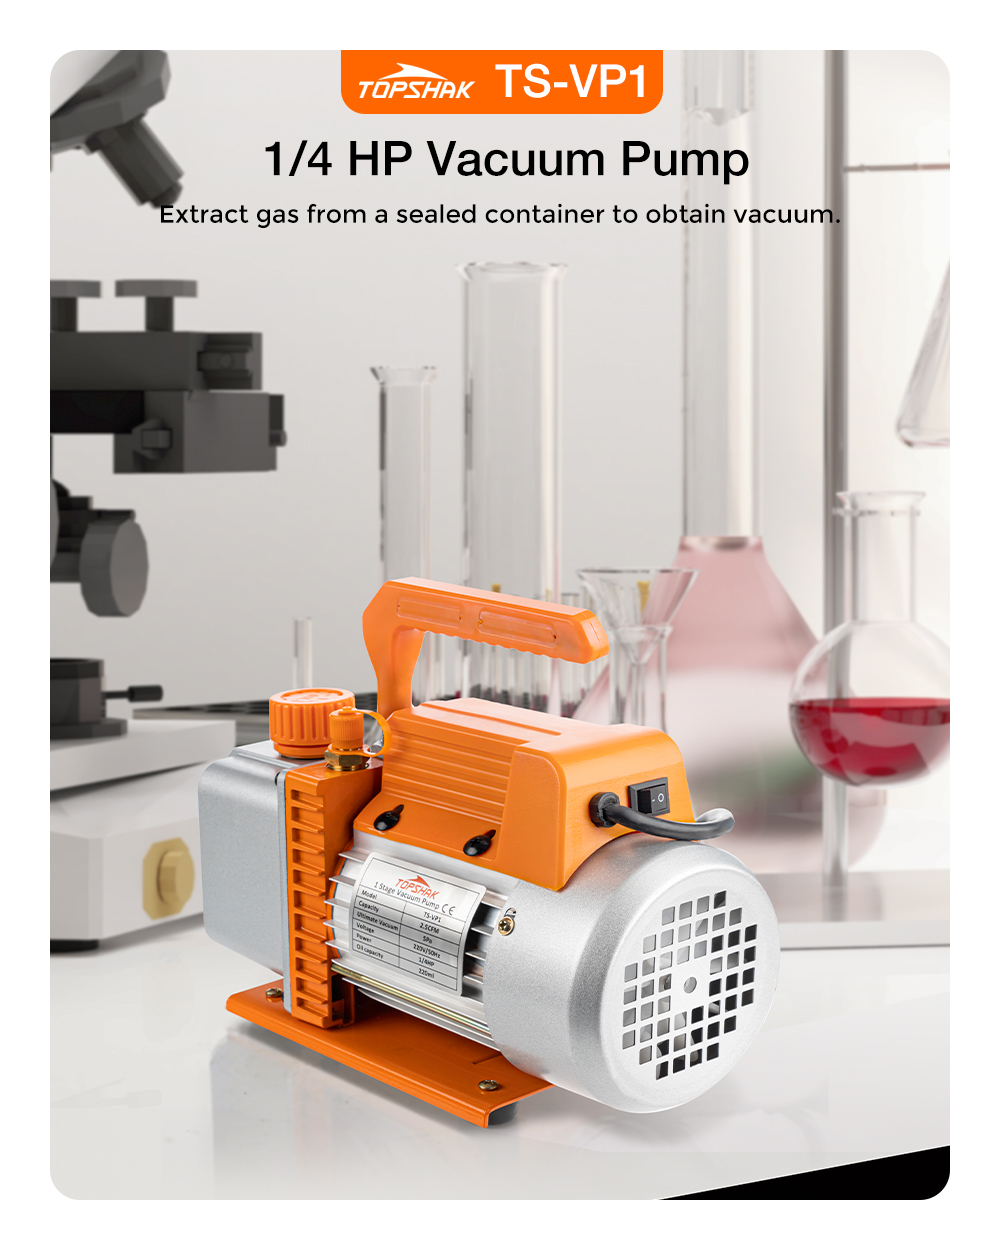 Topshak-TS-VP1-14-HP-Vacuum-Pump-220V-25-CFM-110V-30-CFM-Air-Conditioner-Refrigerant-Air-Tool-With-D-1838270-6